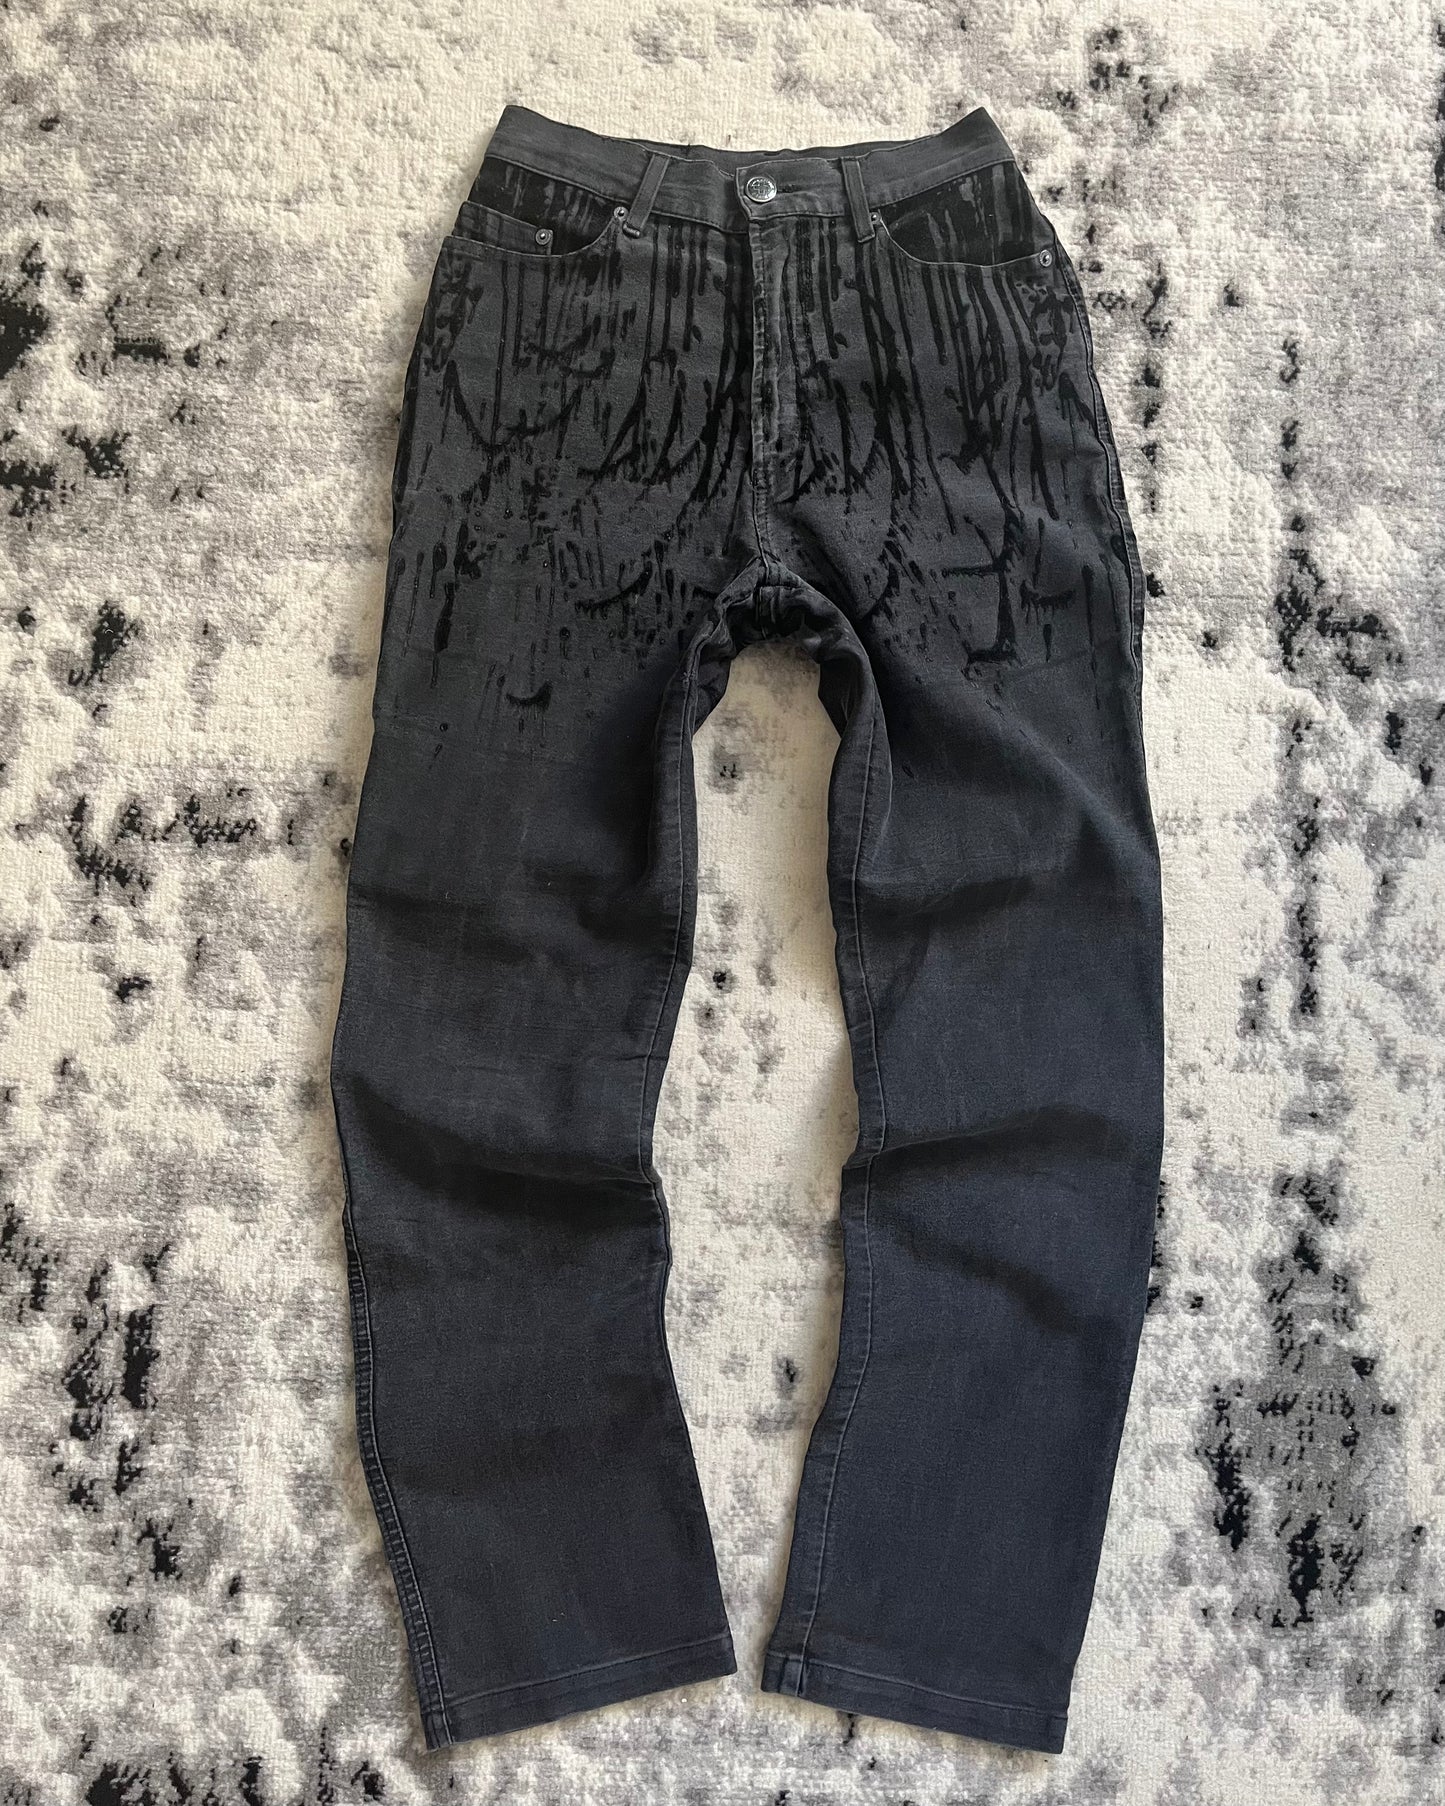 AW98 Jean Paul Gaultier Dark Shadow Blood Pants (XS)